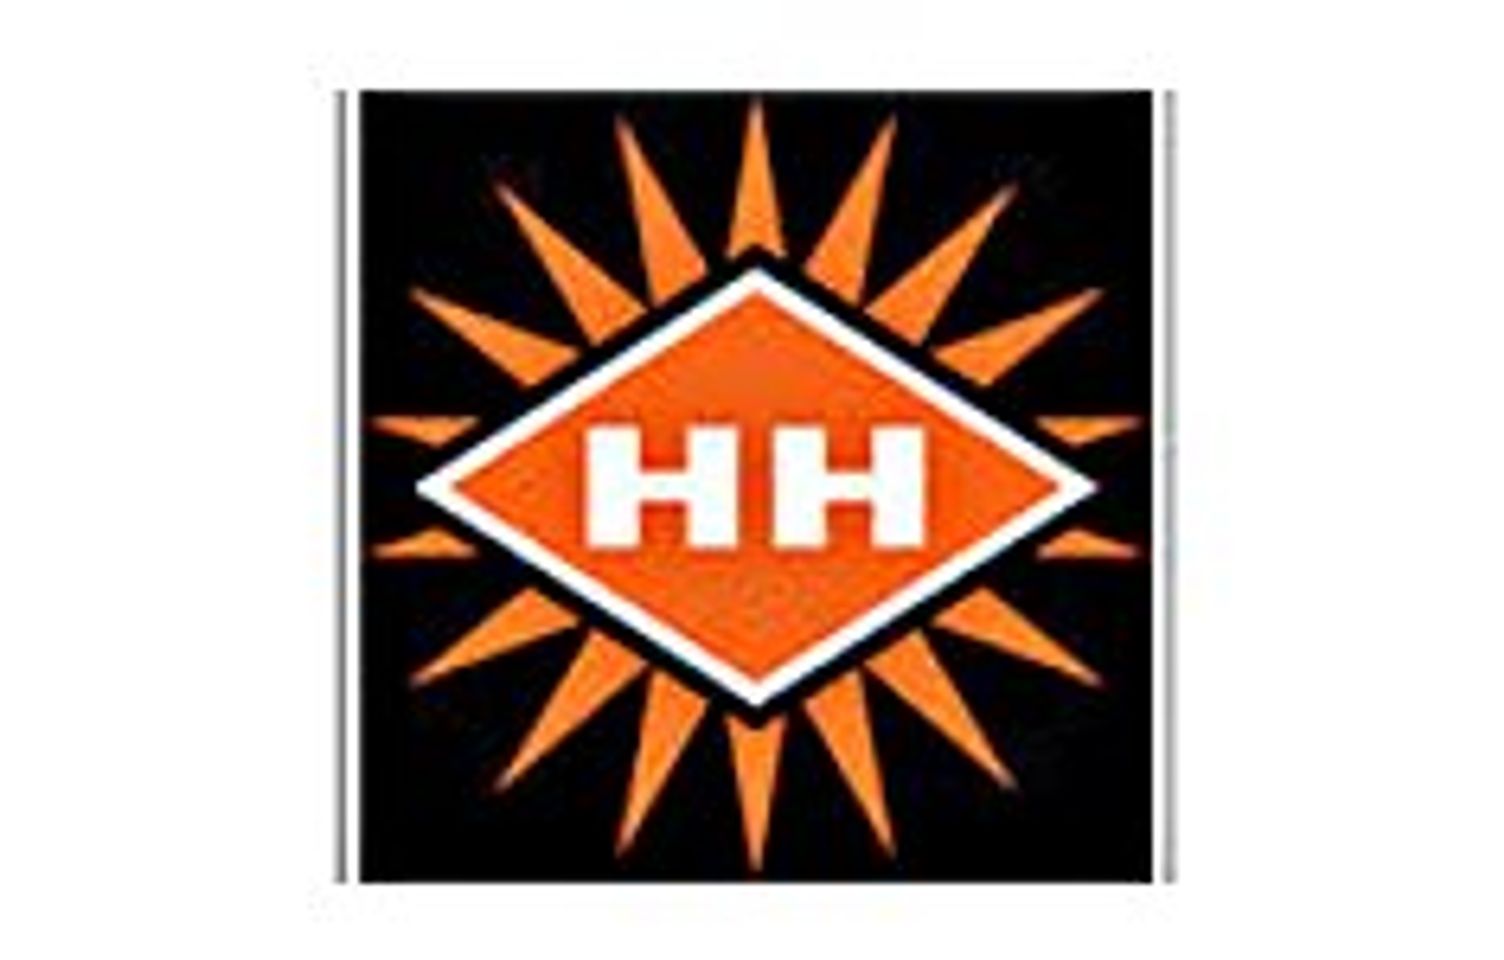 Hot House, Pulse Sign Multiyear Distro Deal